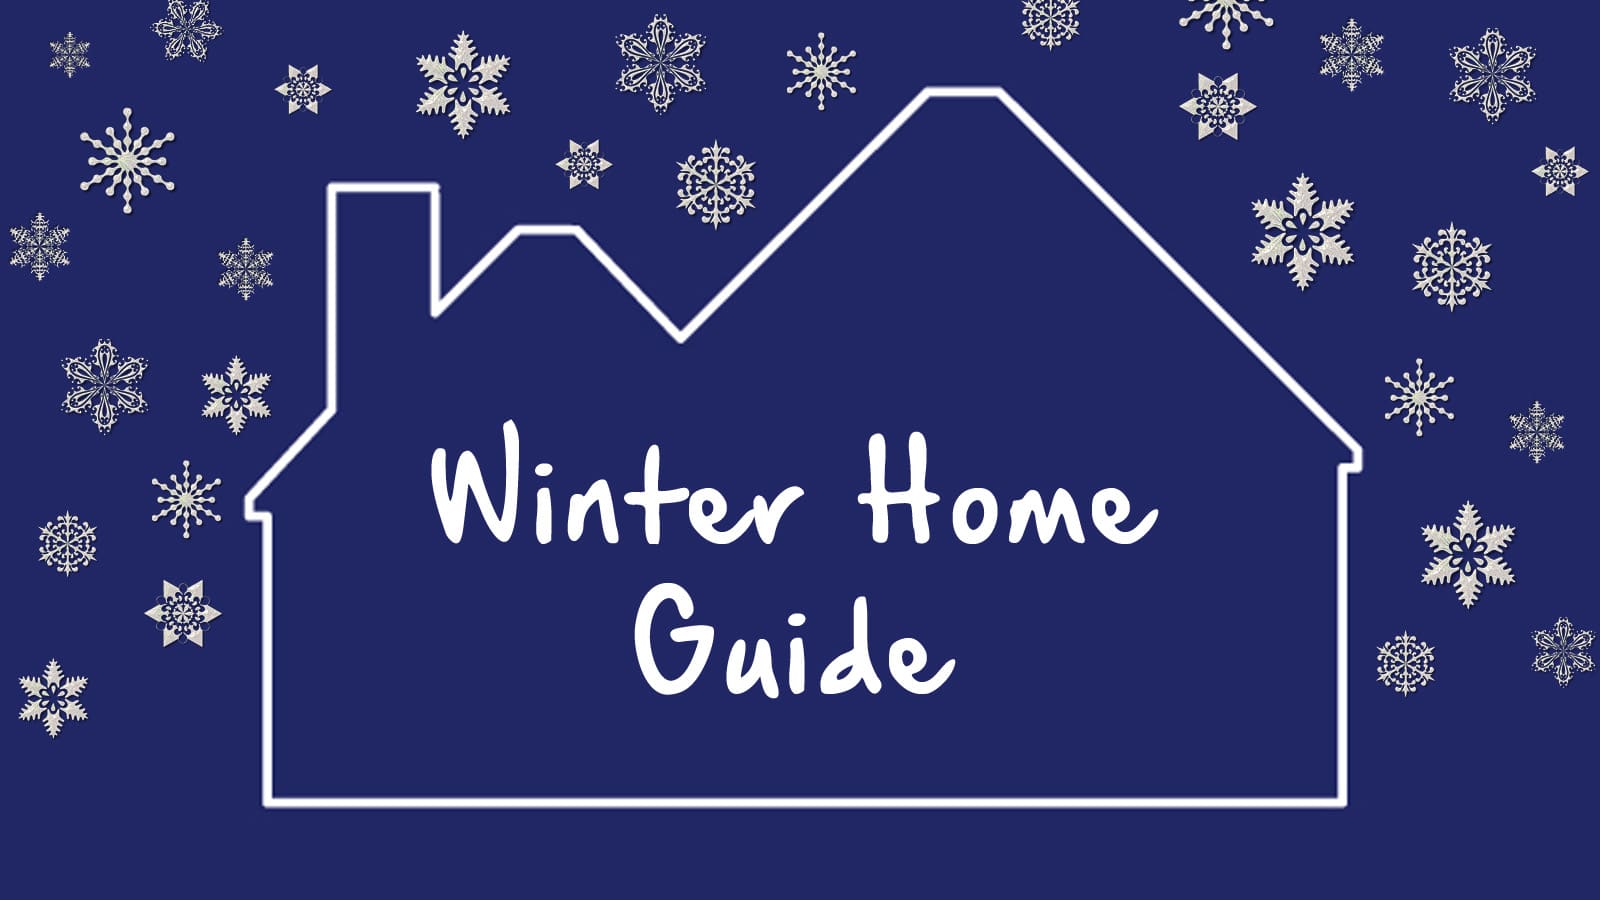 DGC’s Winter Home Guide